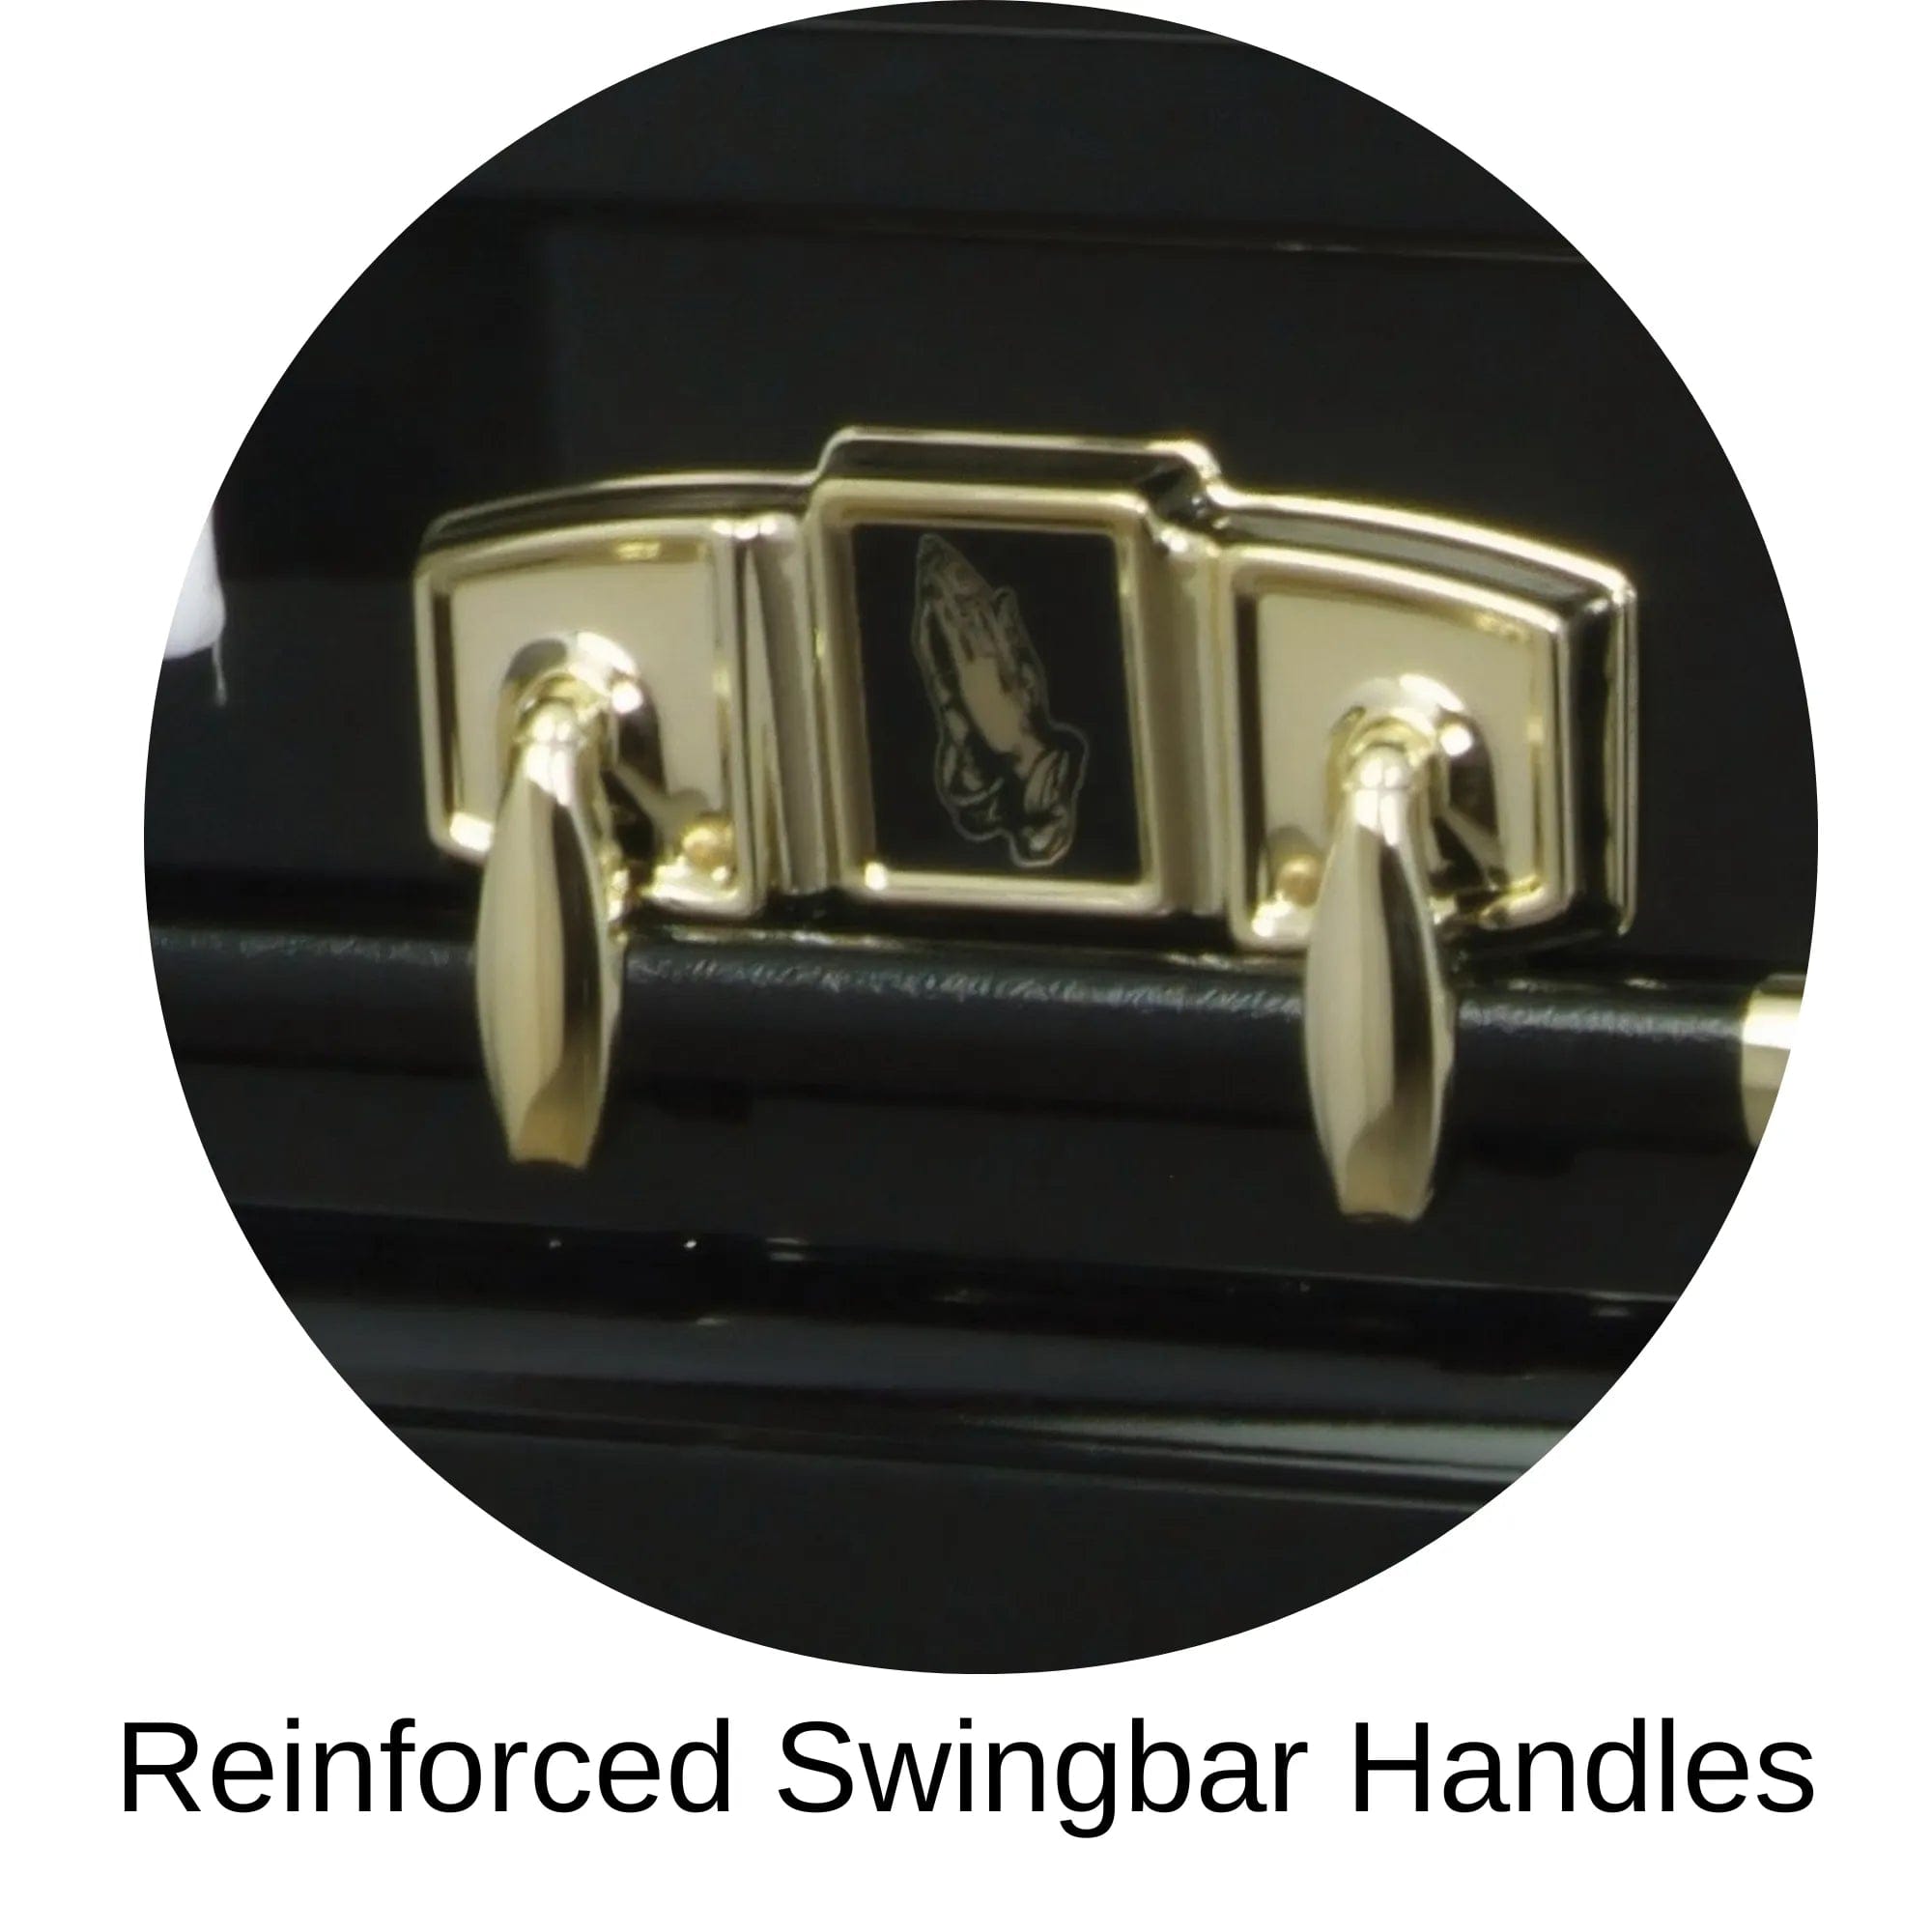 Reinforced Swingbar Handles Black and Gold Cross Black Steel Religious Casket